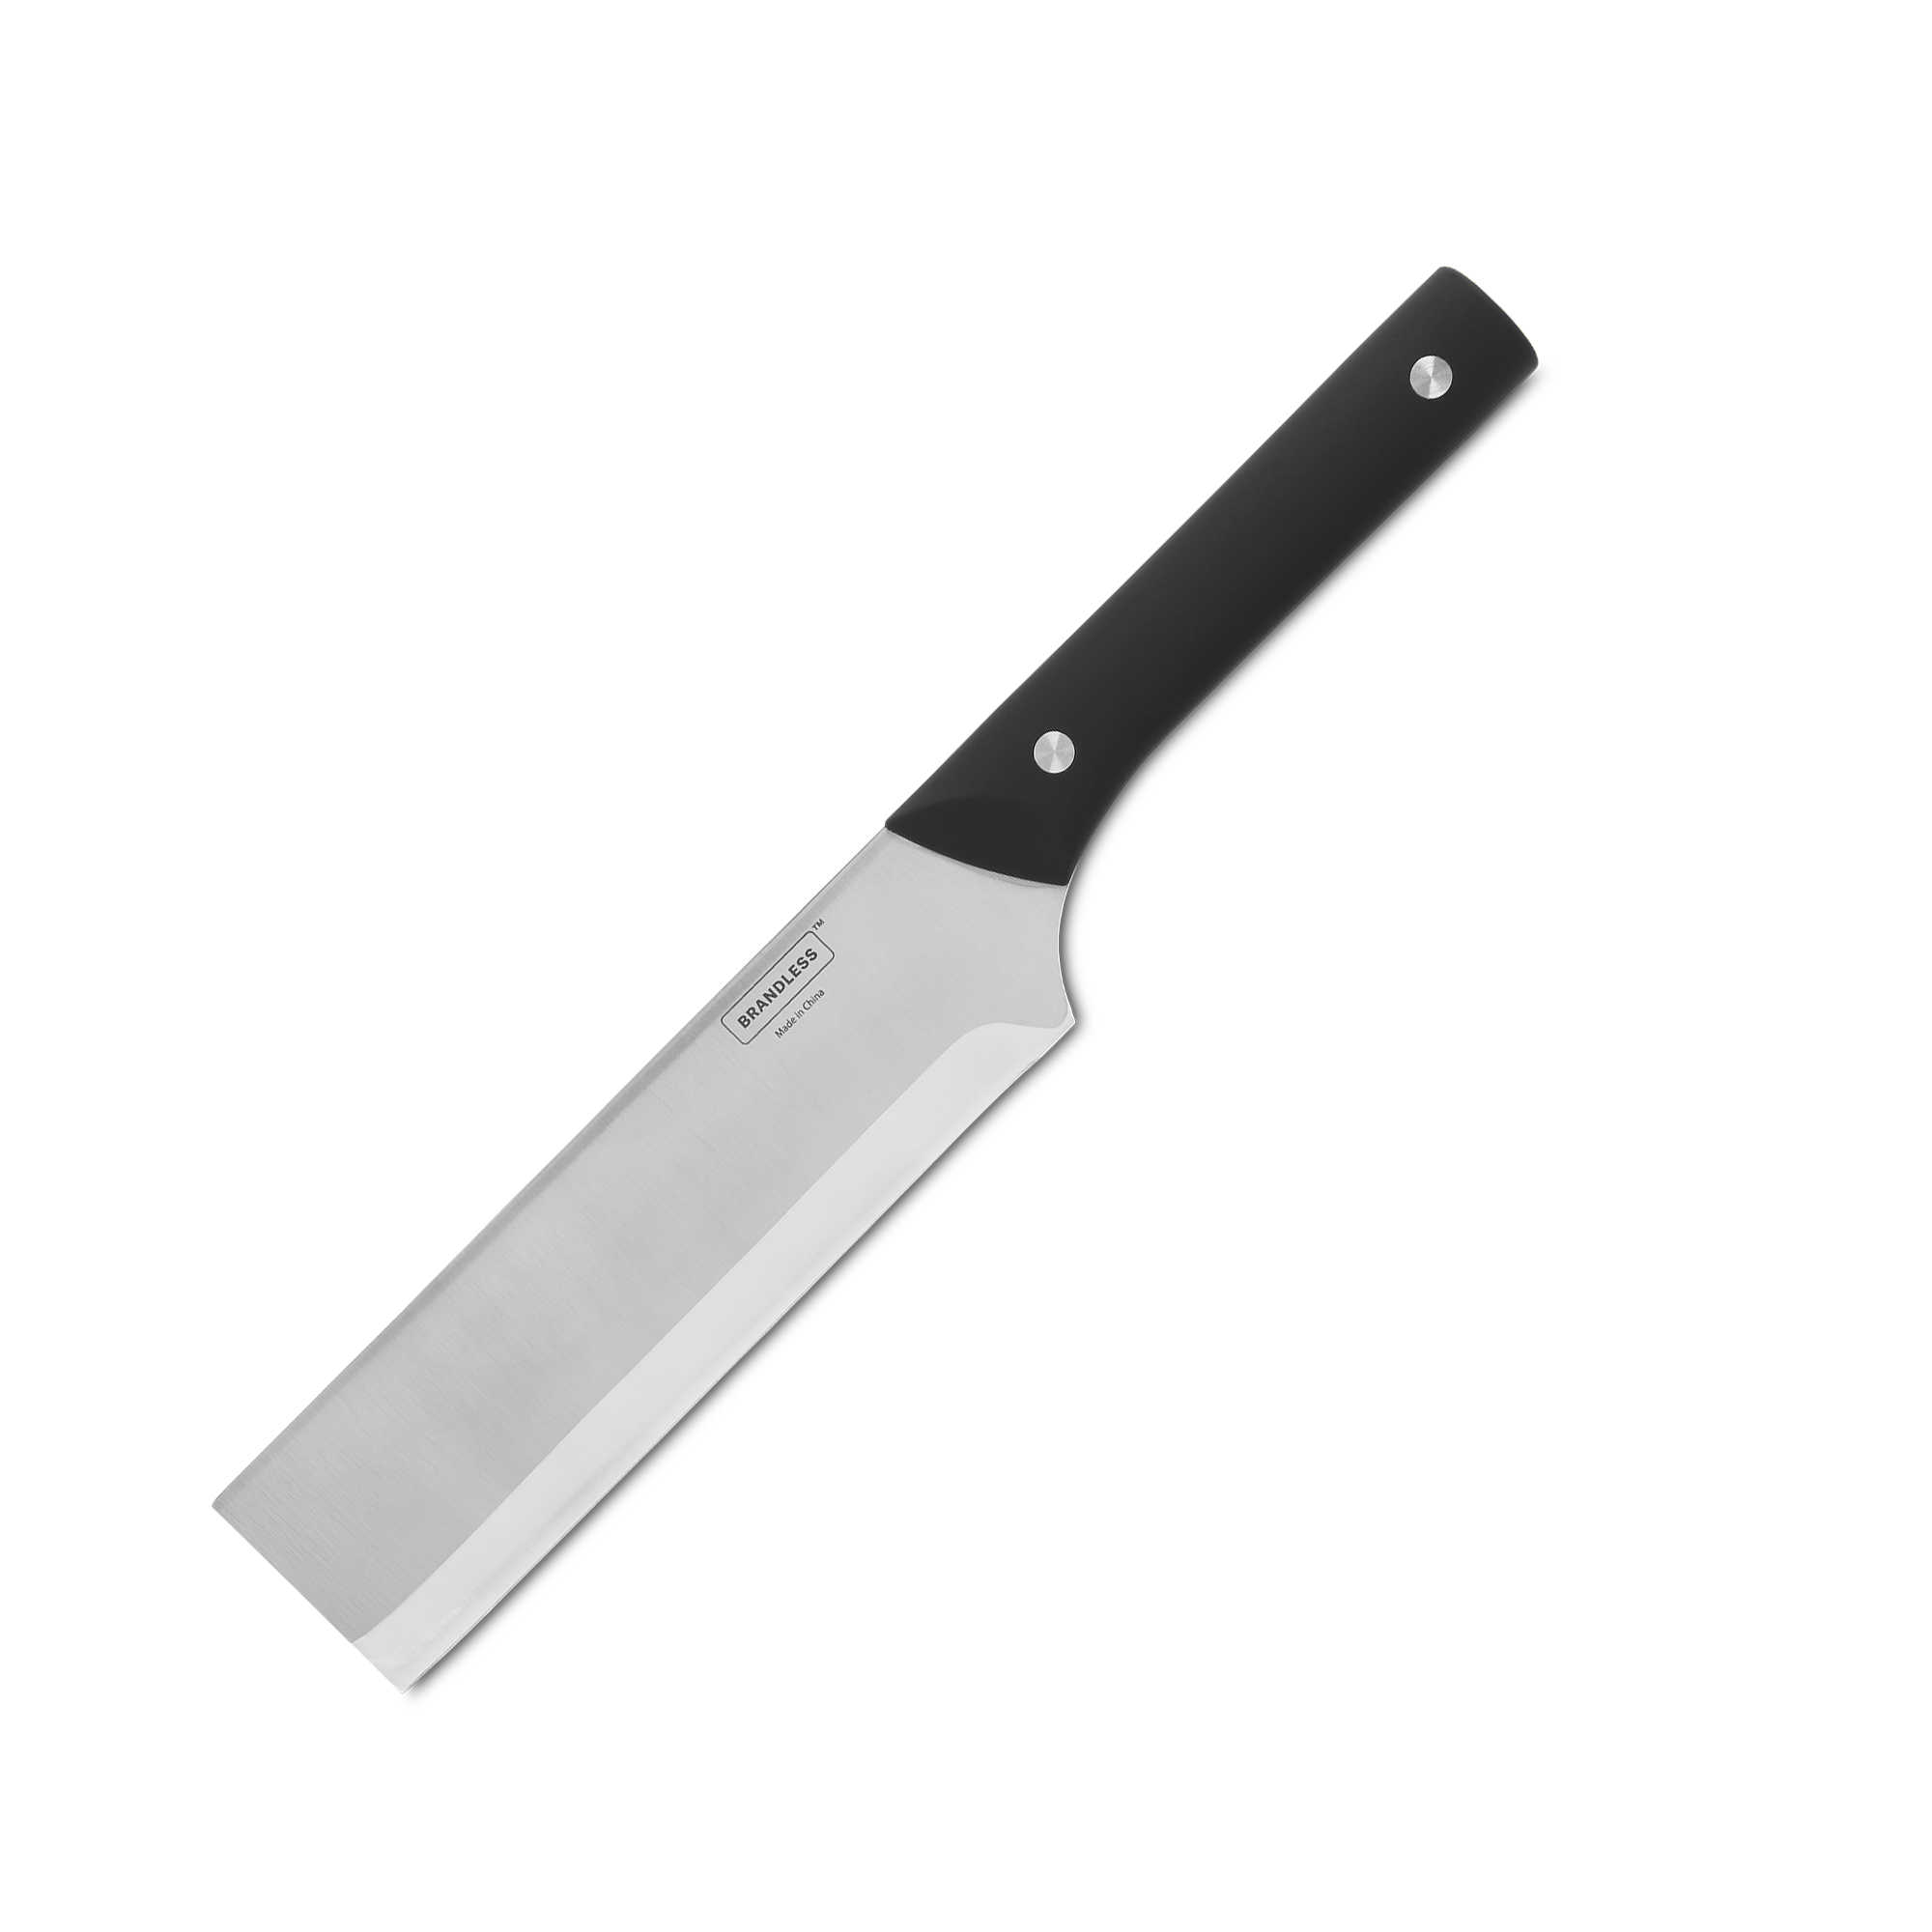 Product photo, nakiri knife with riveted handle.